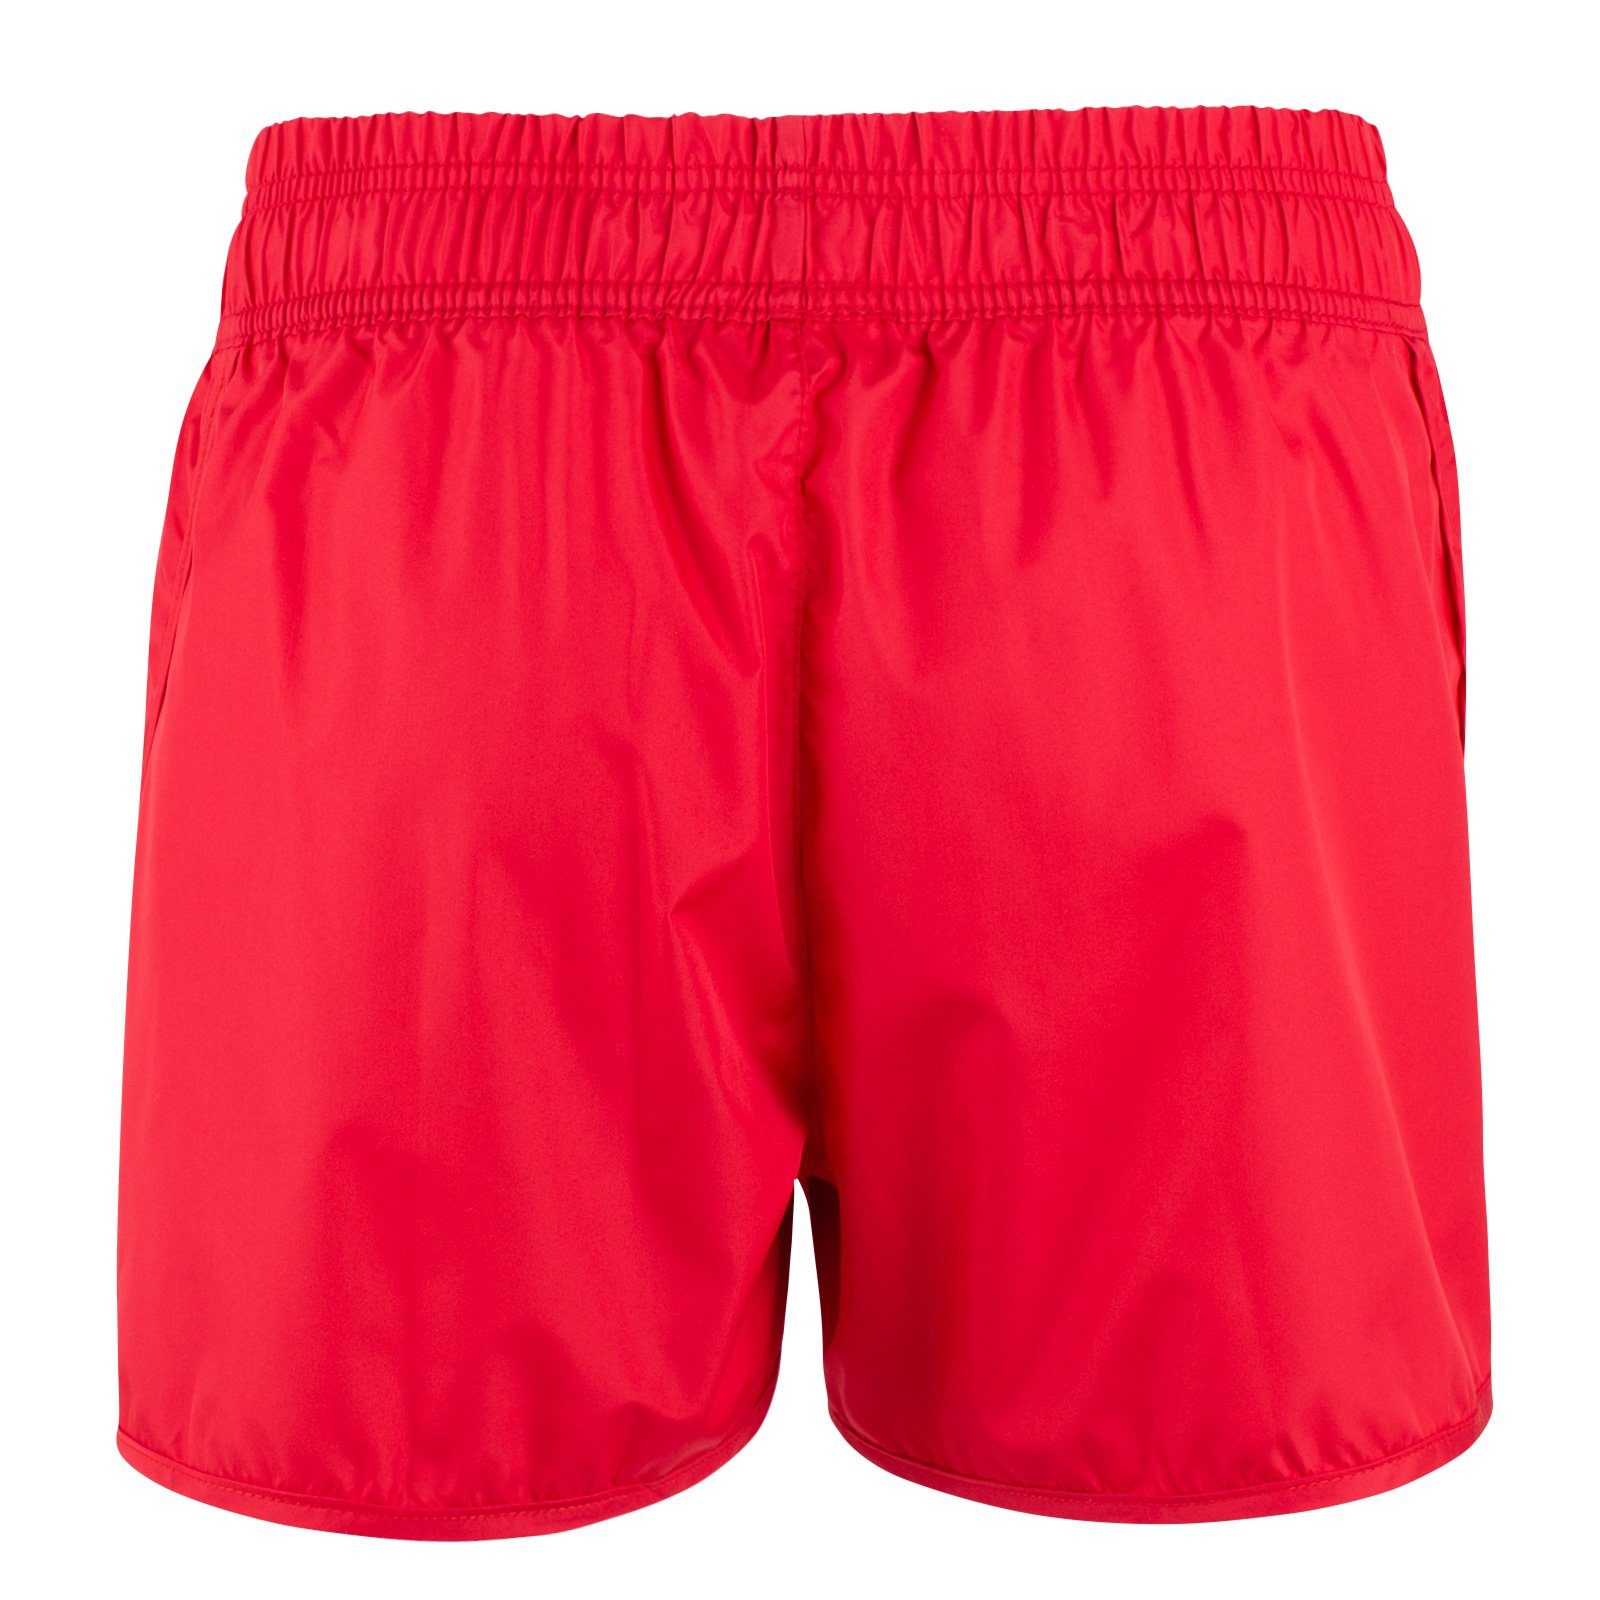 Sporthose Rot Short kurze Soul® Quick aus Sport Schnelltrocknend Stark - Dry Sporthose Material -